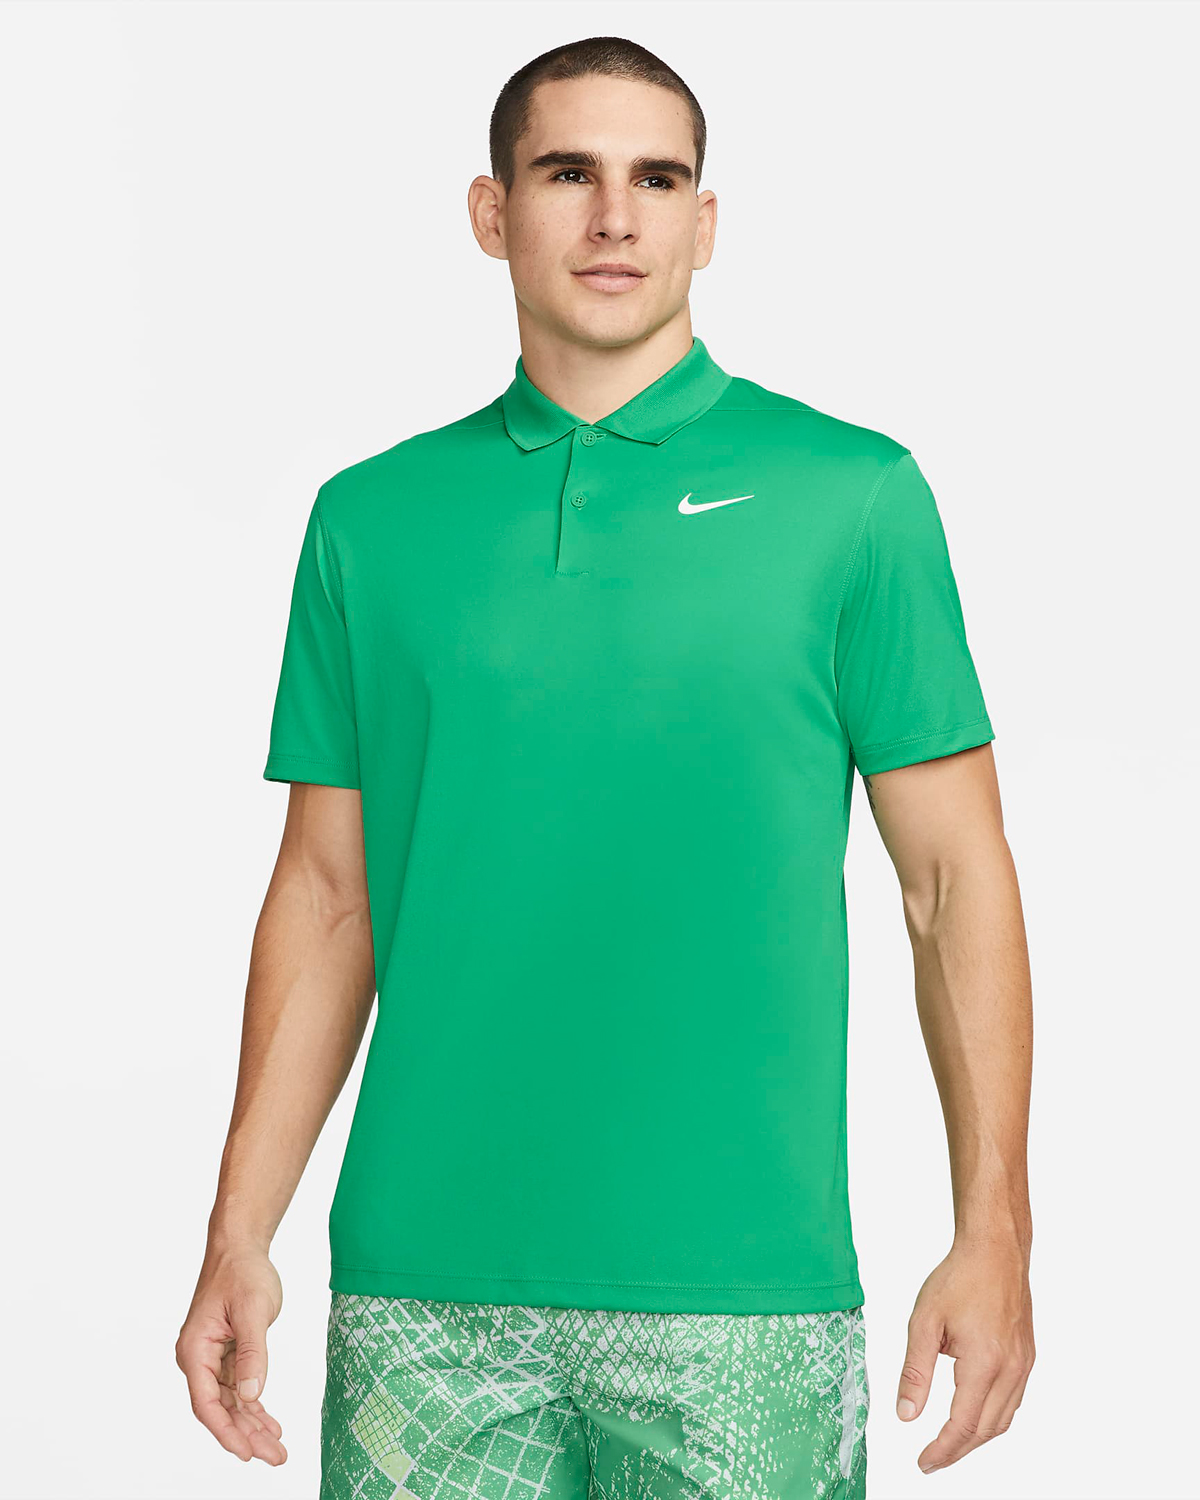 Nike-Stadium-Green-Polo-Shirt